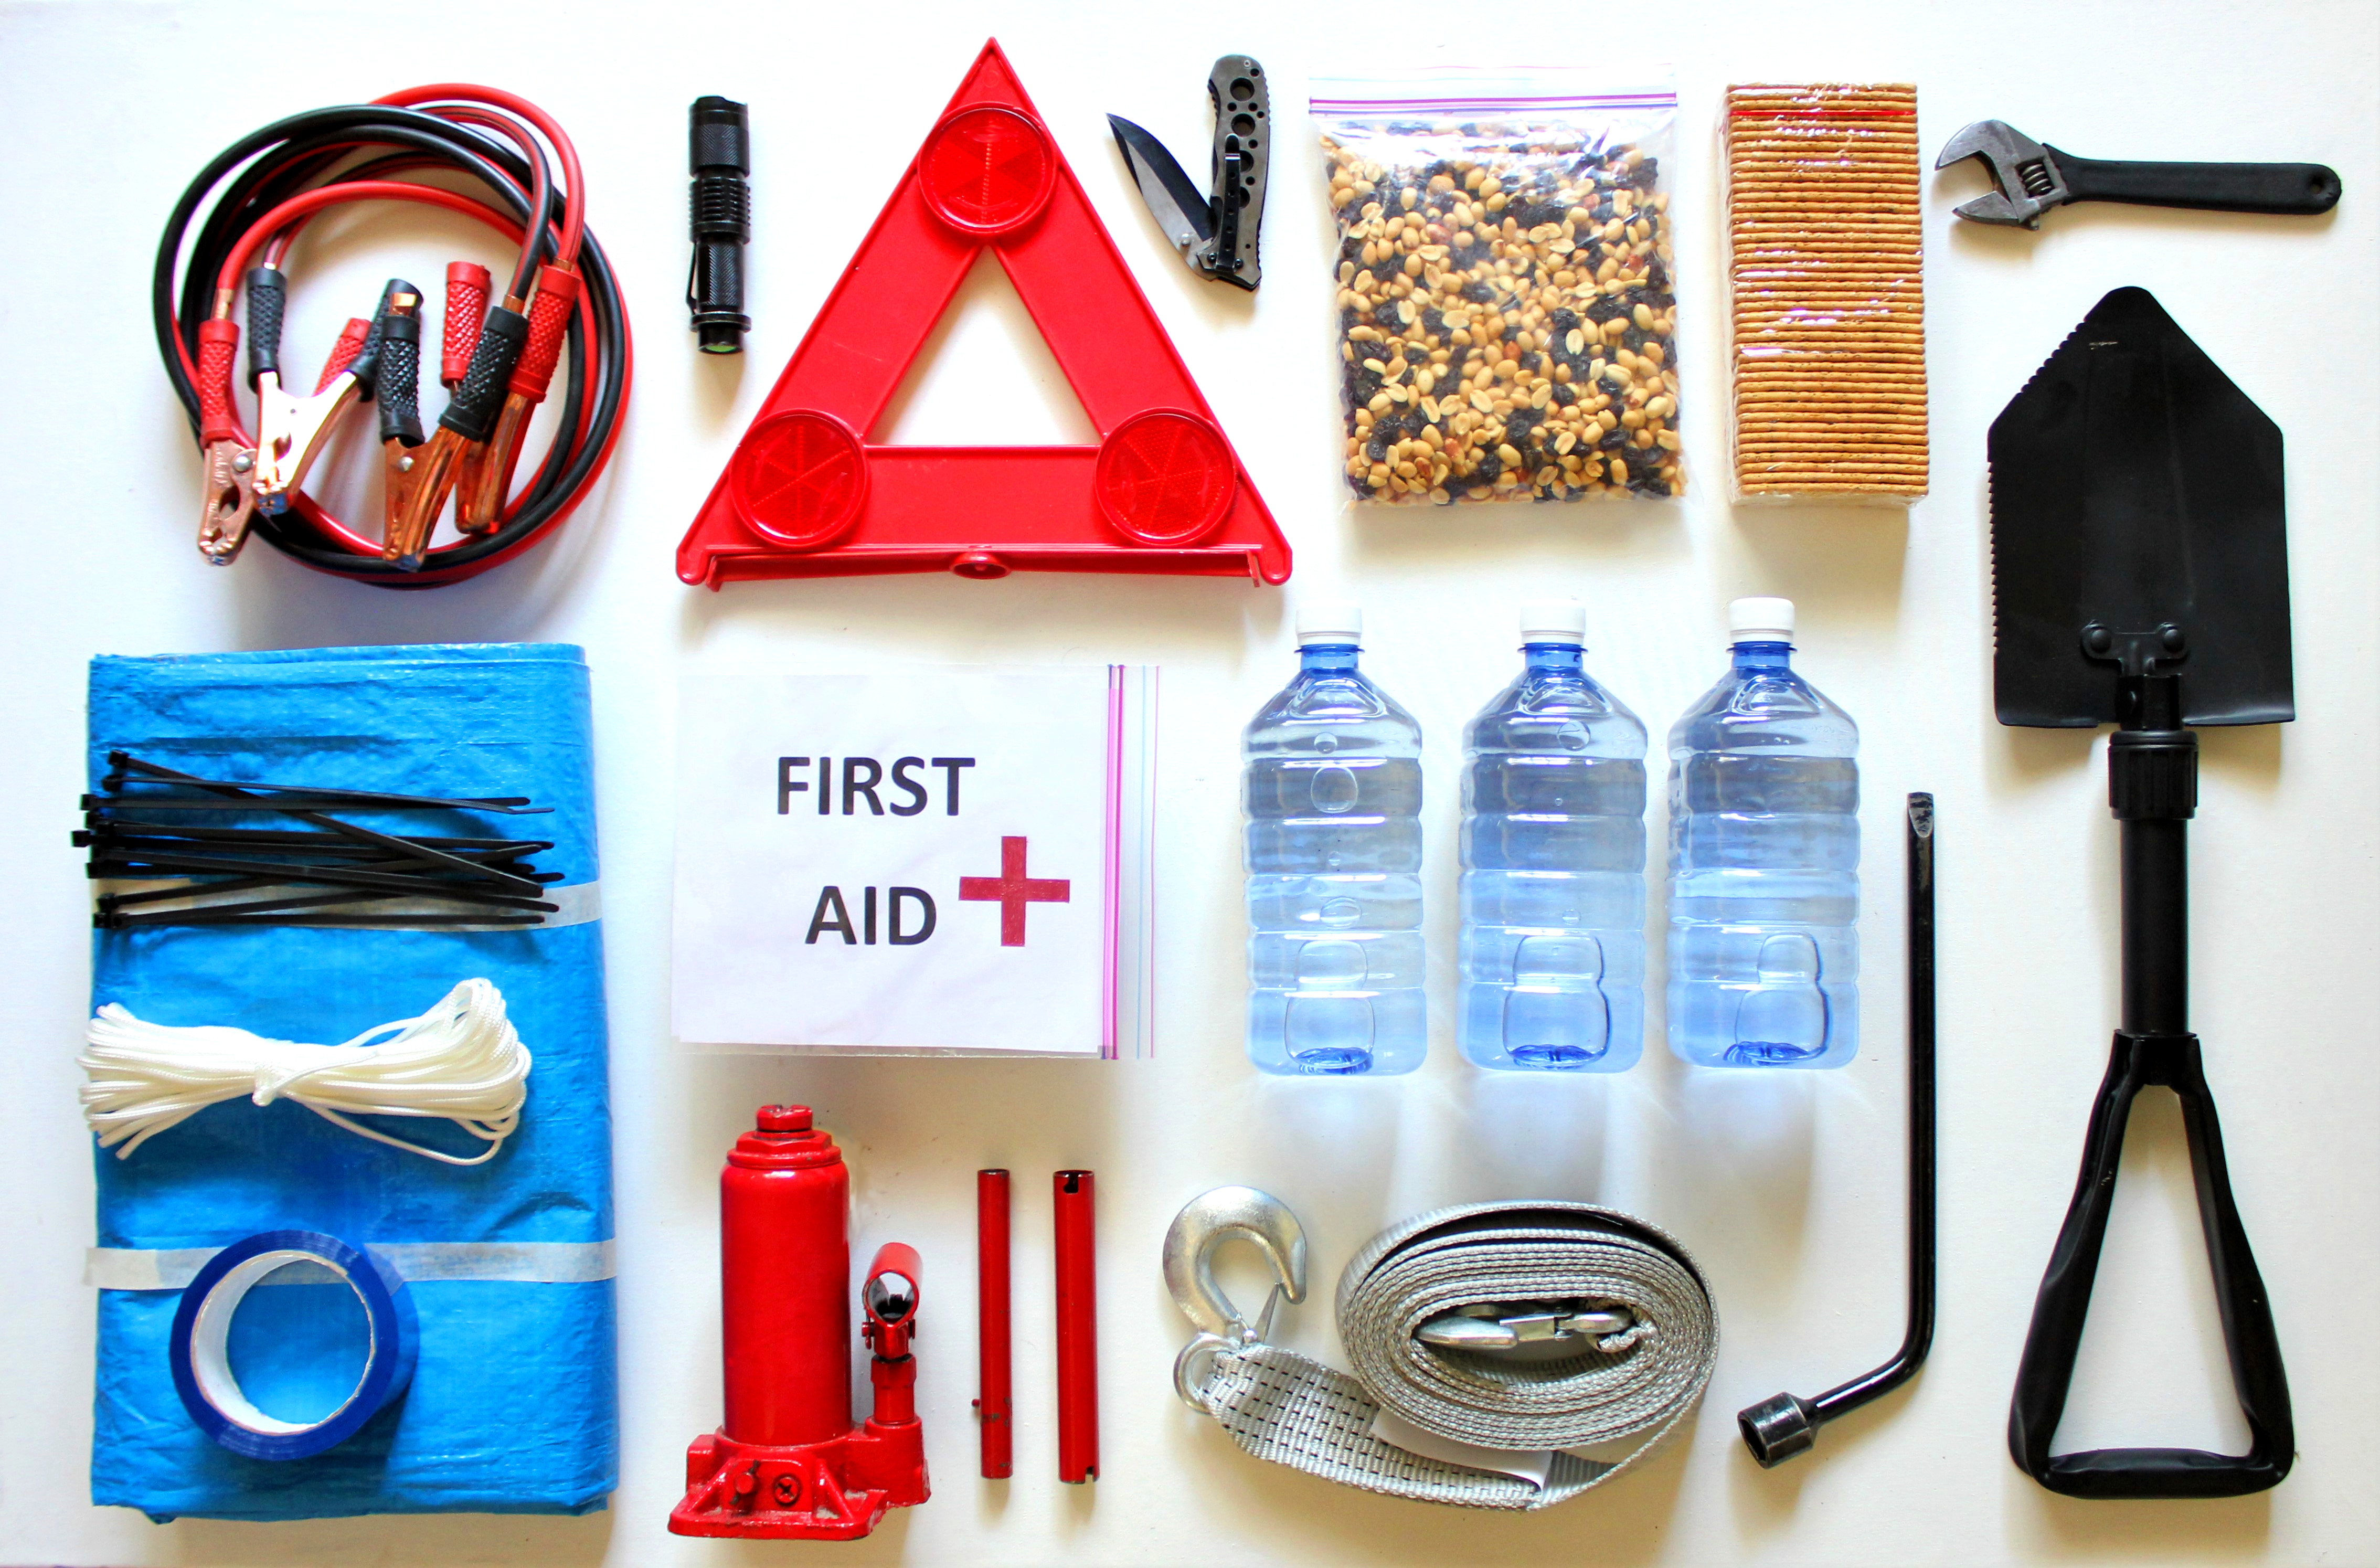 Car Safety Kit for Emergency